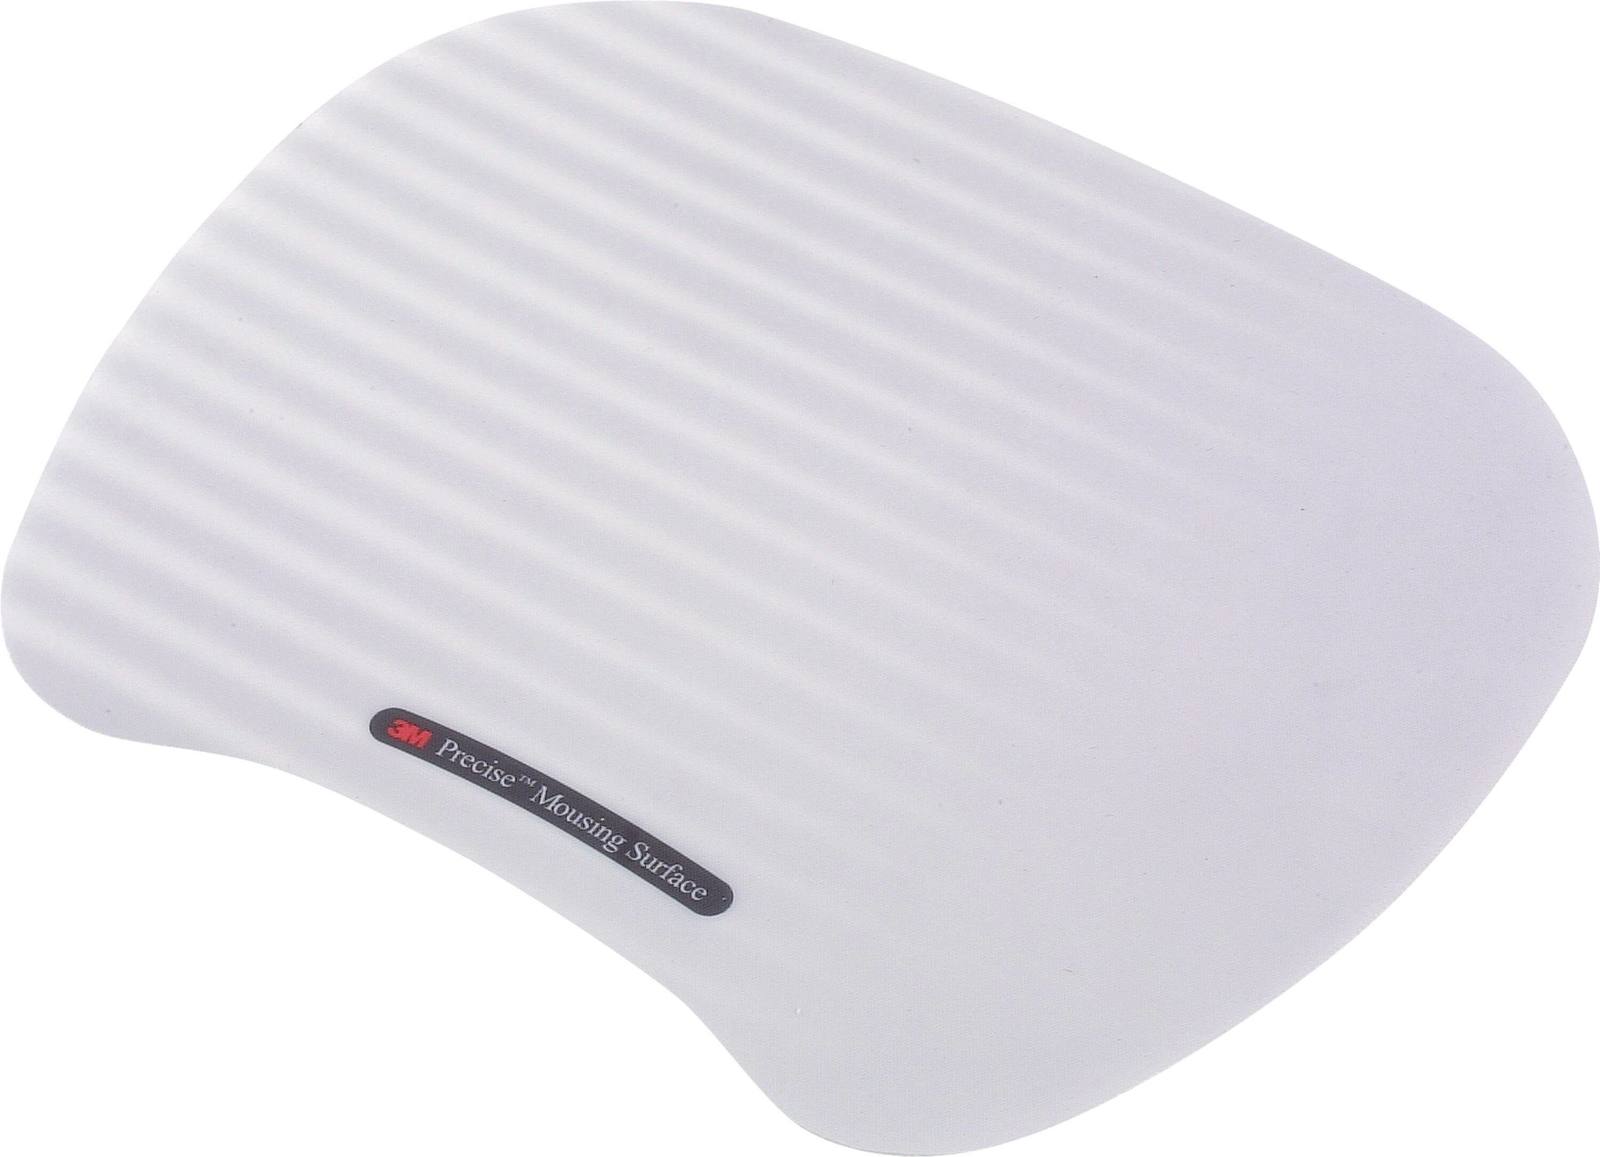 3M Präzisions-Mousepad MS201MX, 22,7 cm x 18,4 cm, grau, weiß, 1 Stück